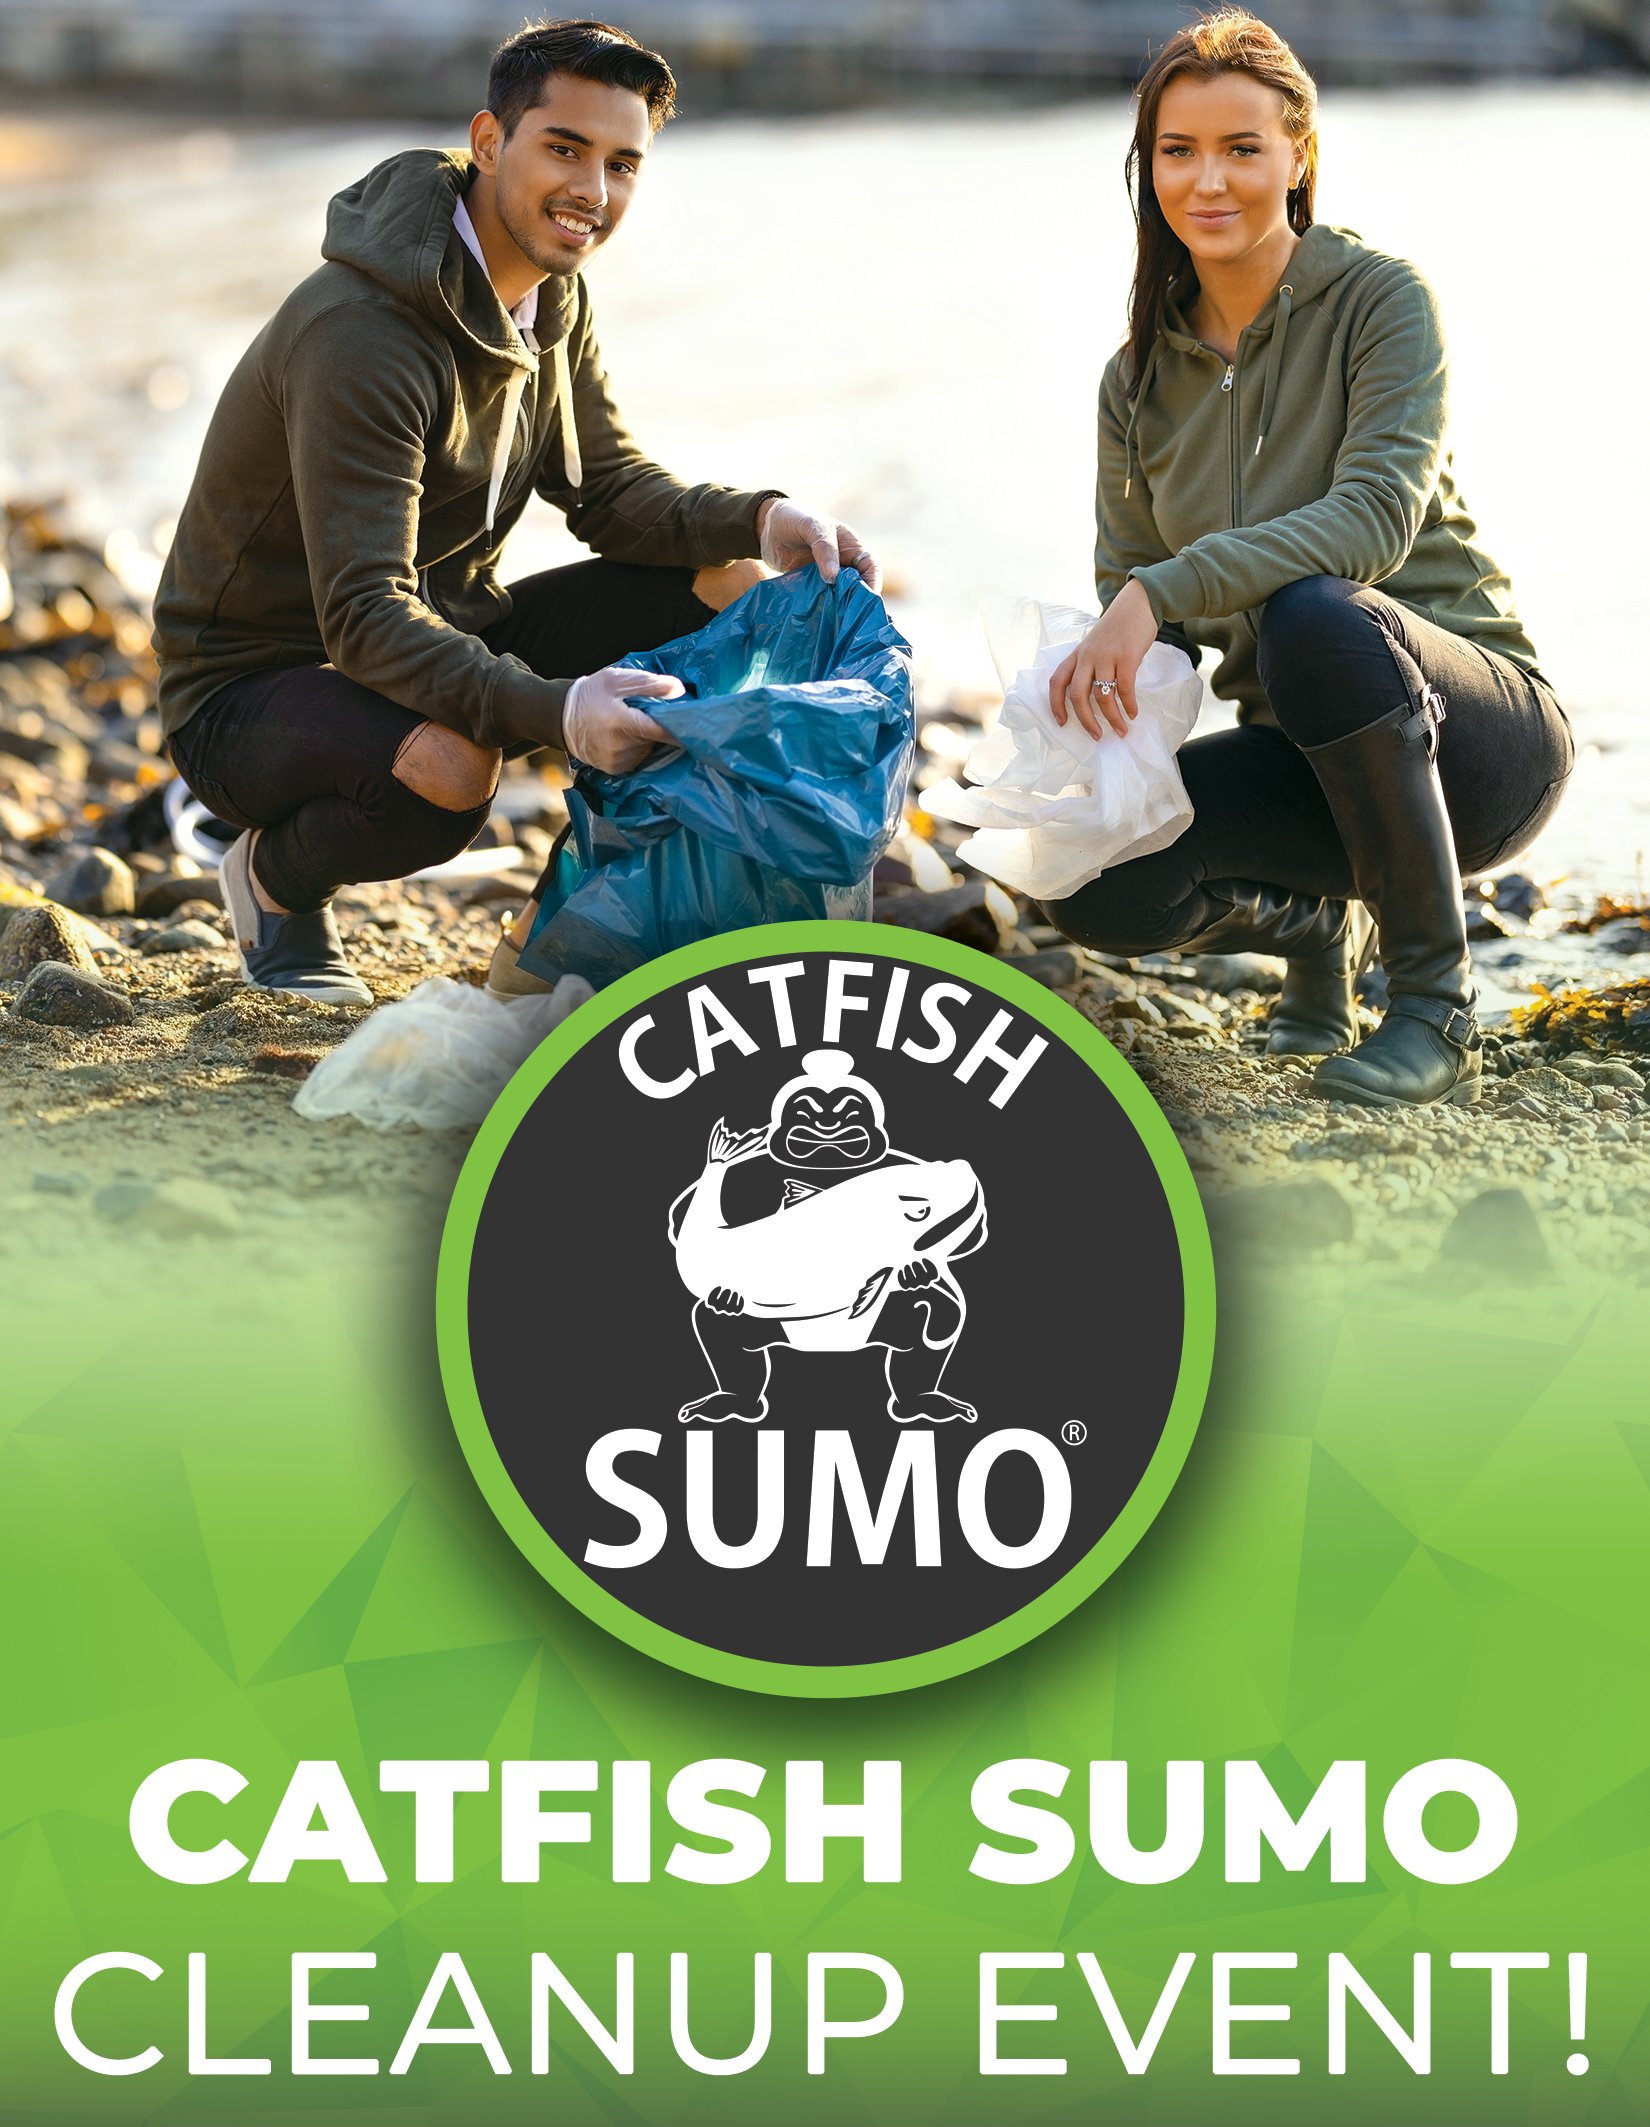 Catfish Sumo rewards anglers for picking up trash